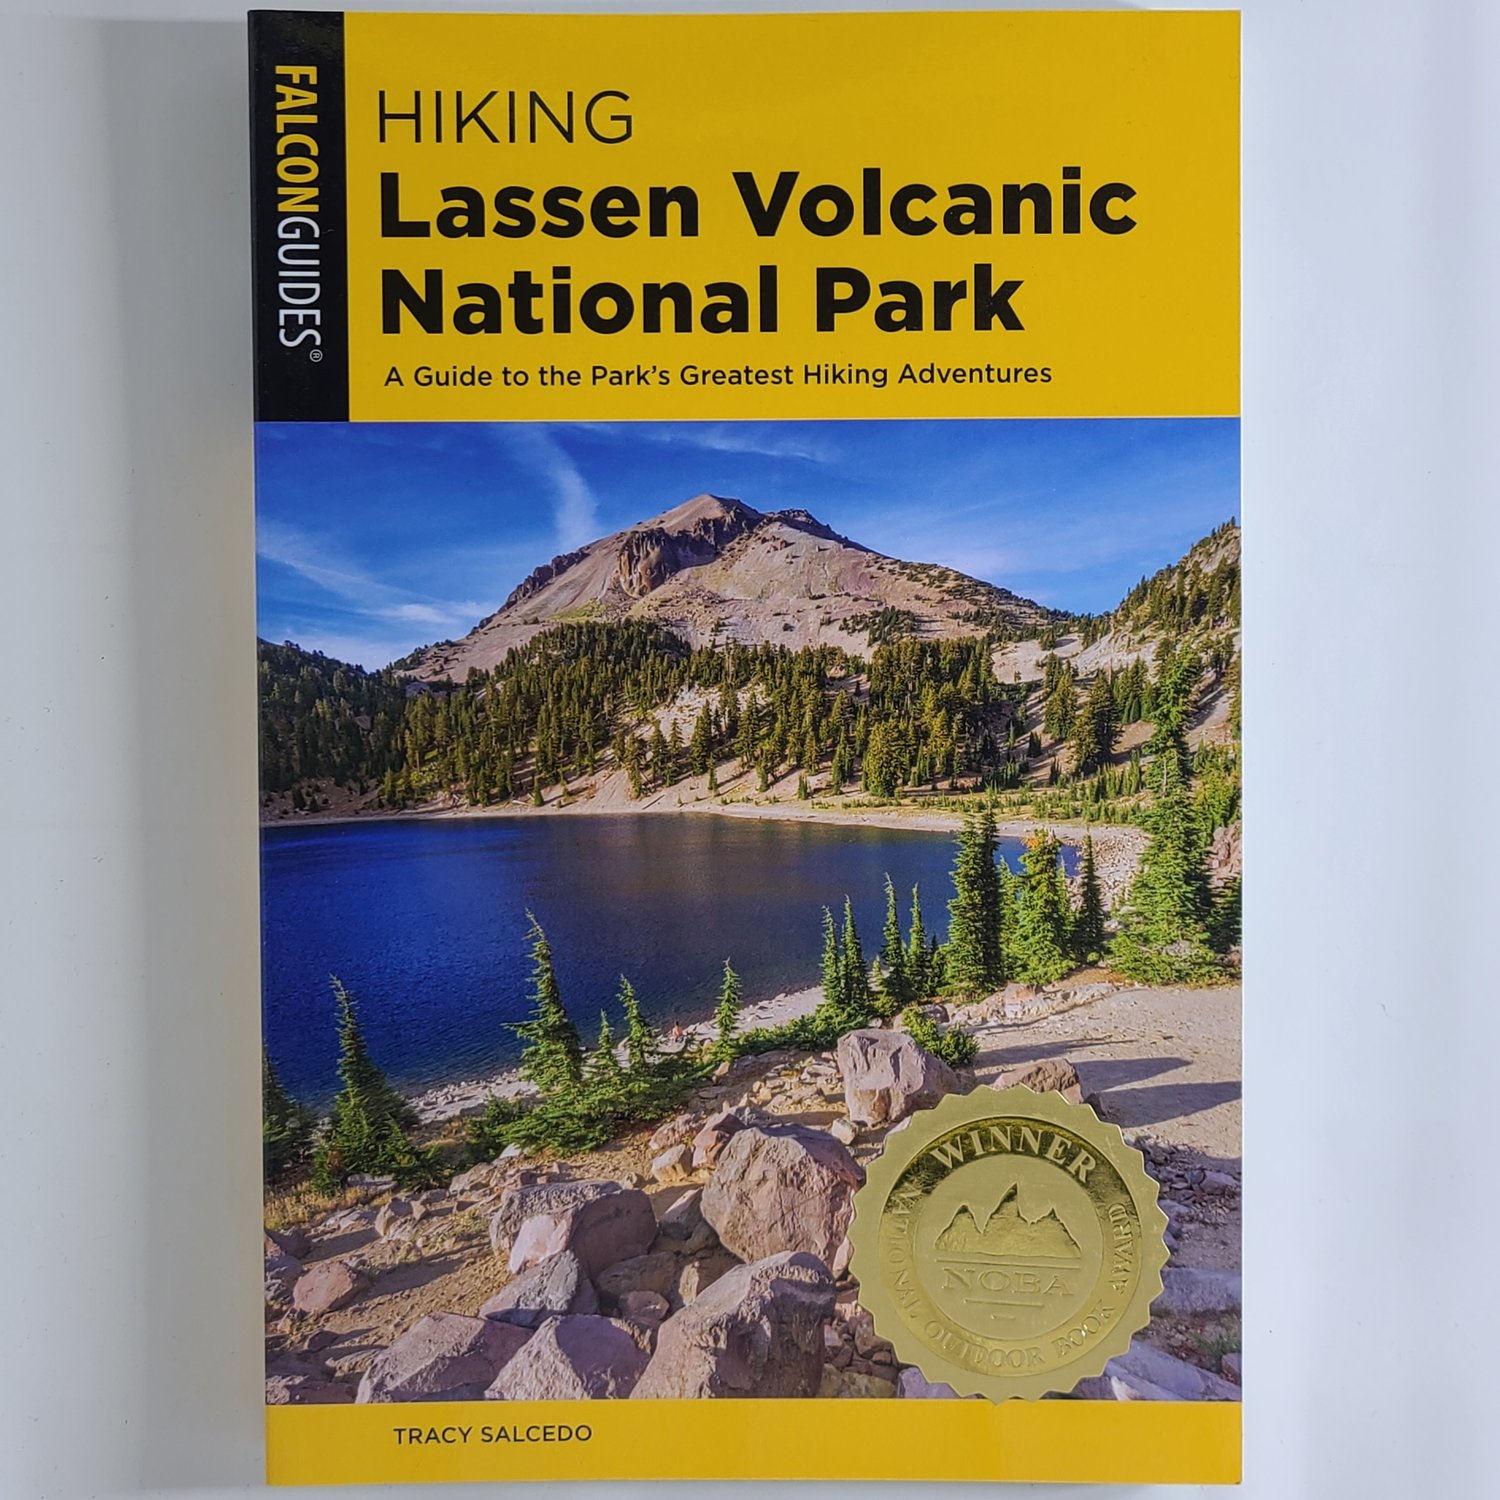 Plan a Visit to Lassen Volcanic National Park